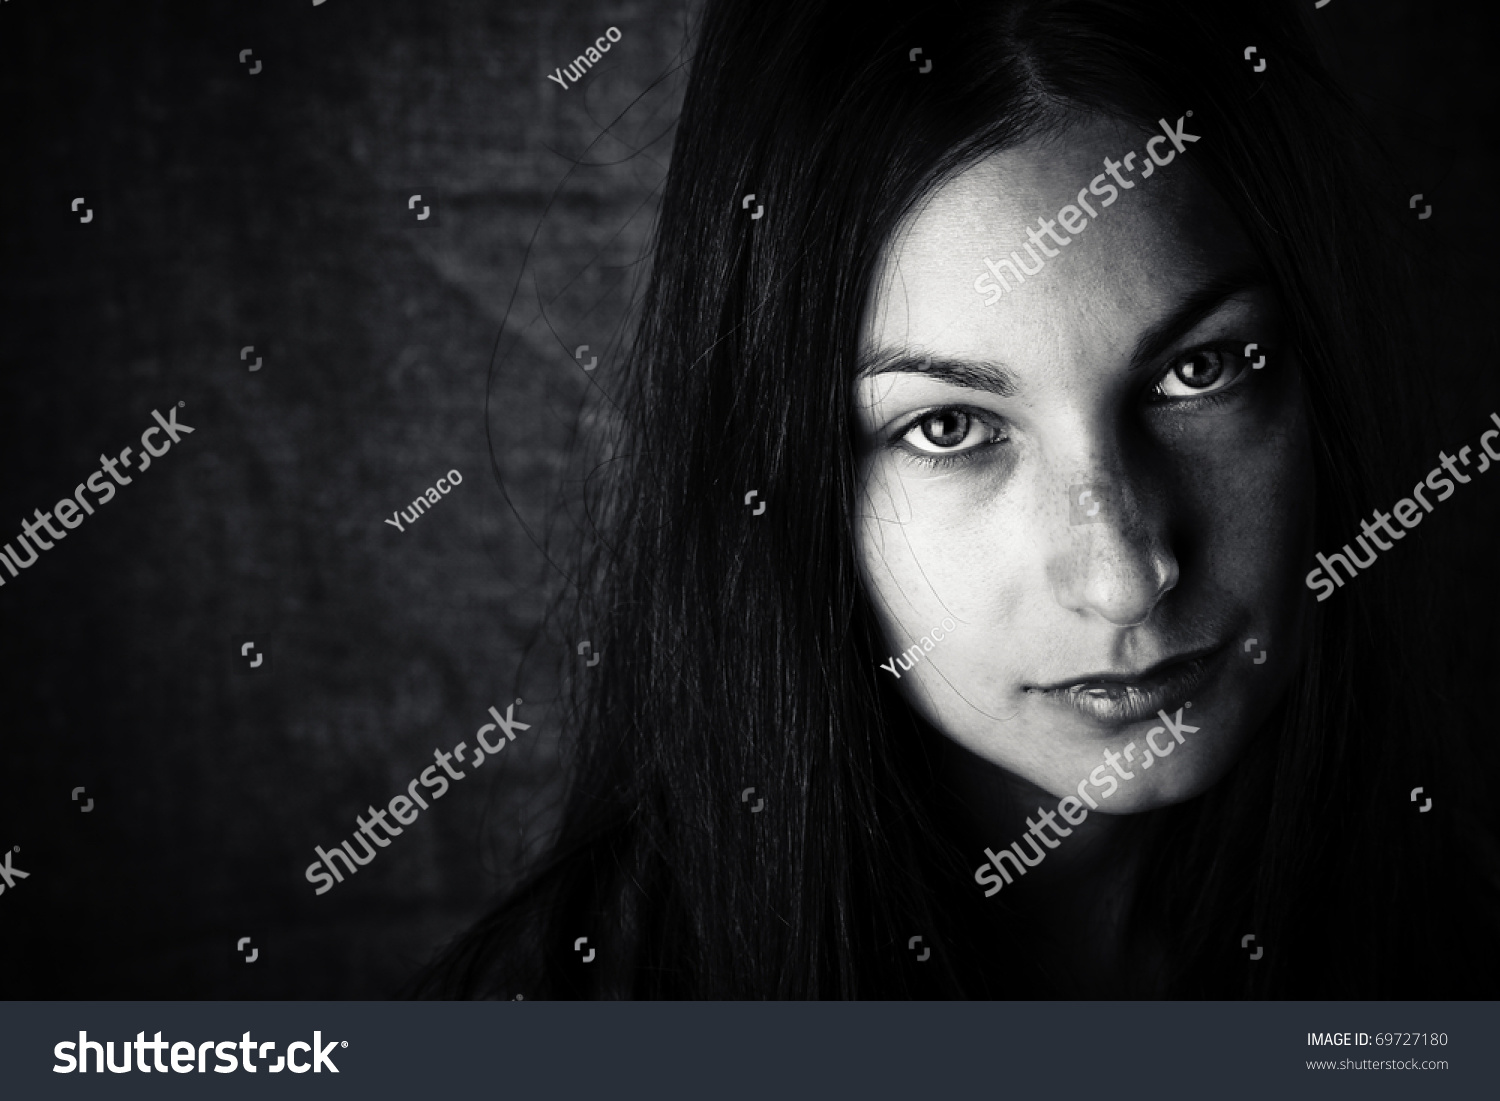 Young Sad Woman Portrait Stock Photo 69727180 : Shutterstock